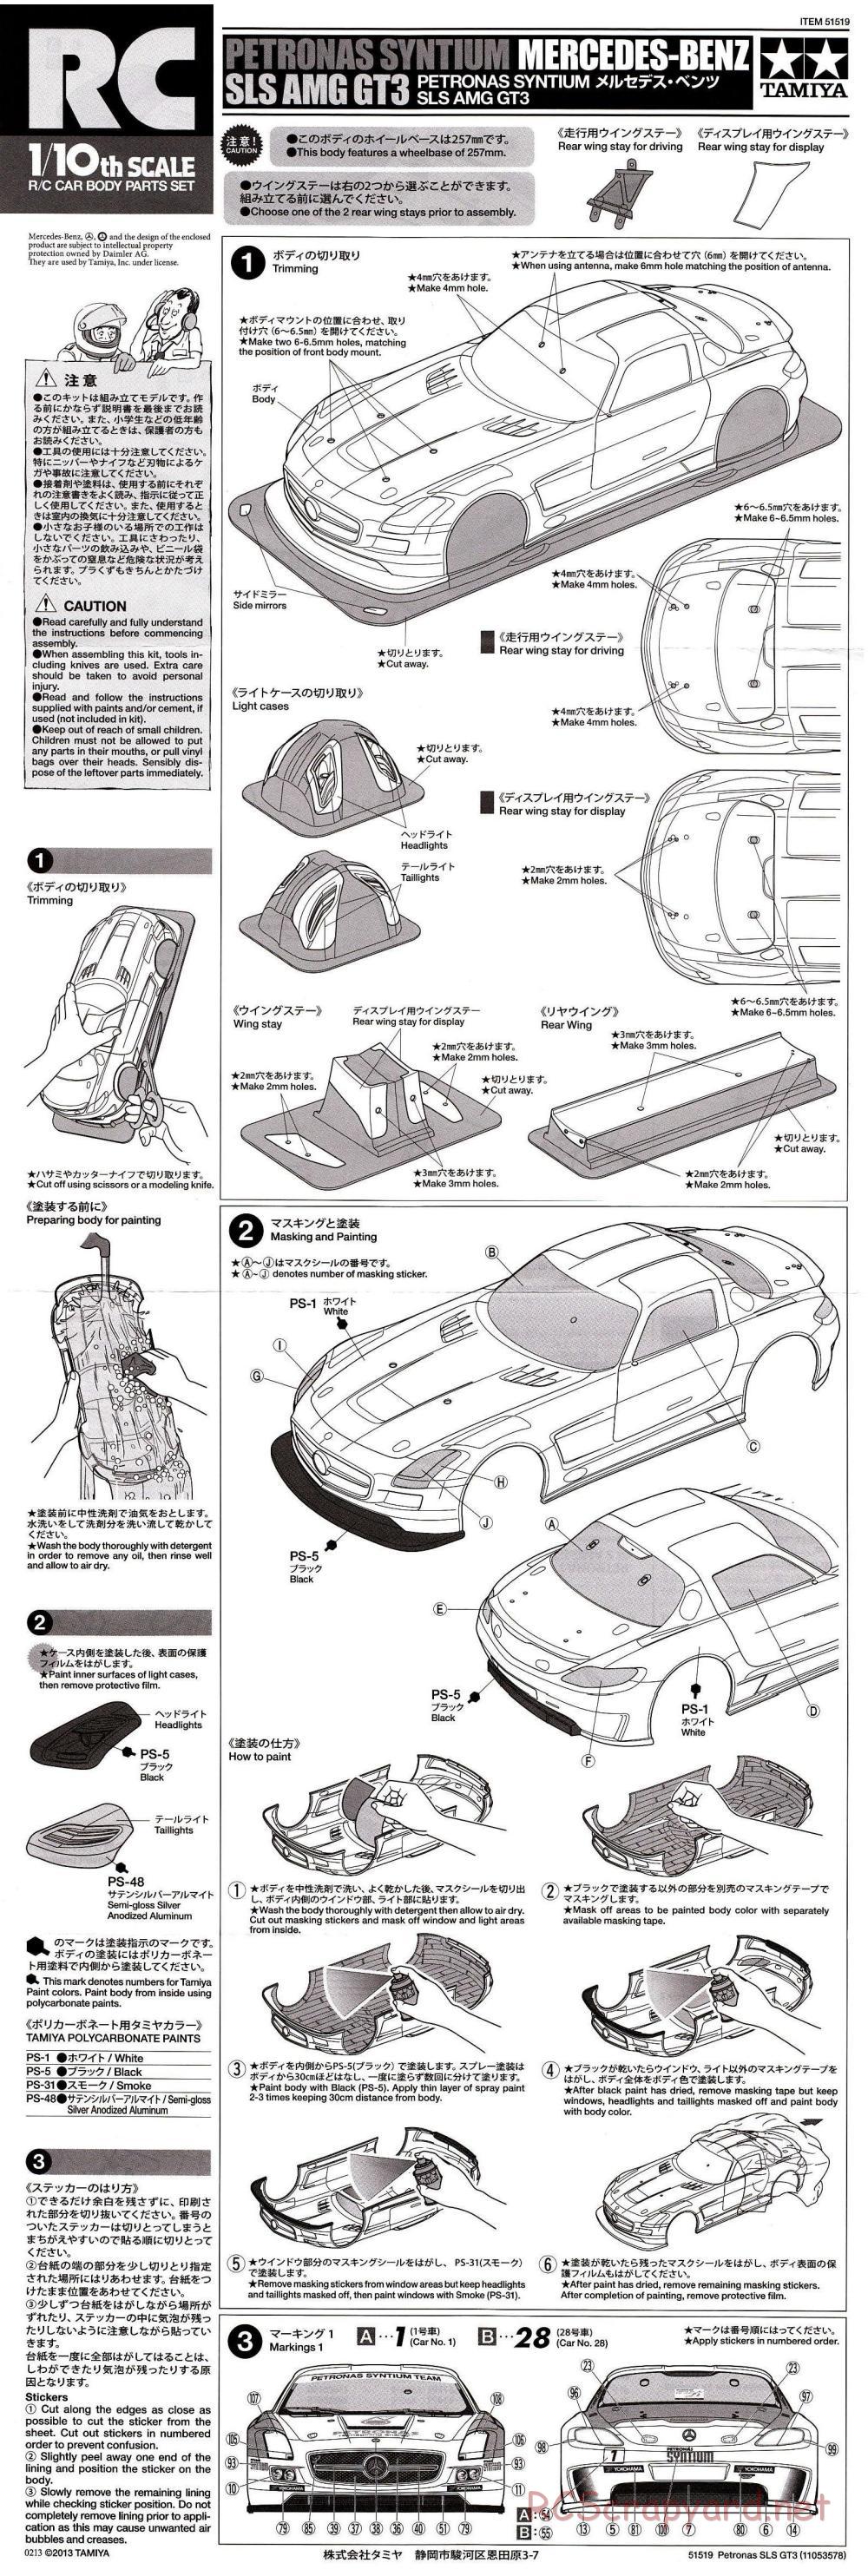 Tamiya - Mercedes Benz SLS AMG GT3 - TA06 Chassis - Body Manual - Page 1